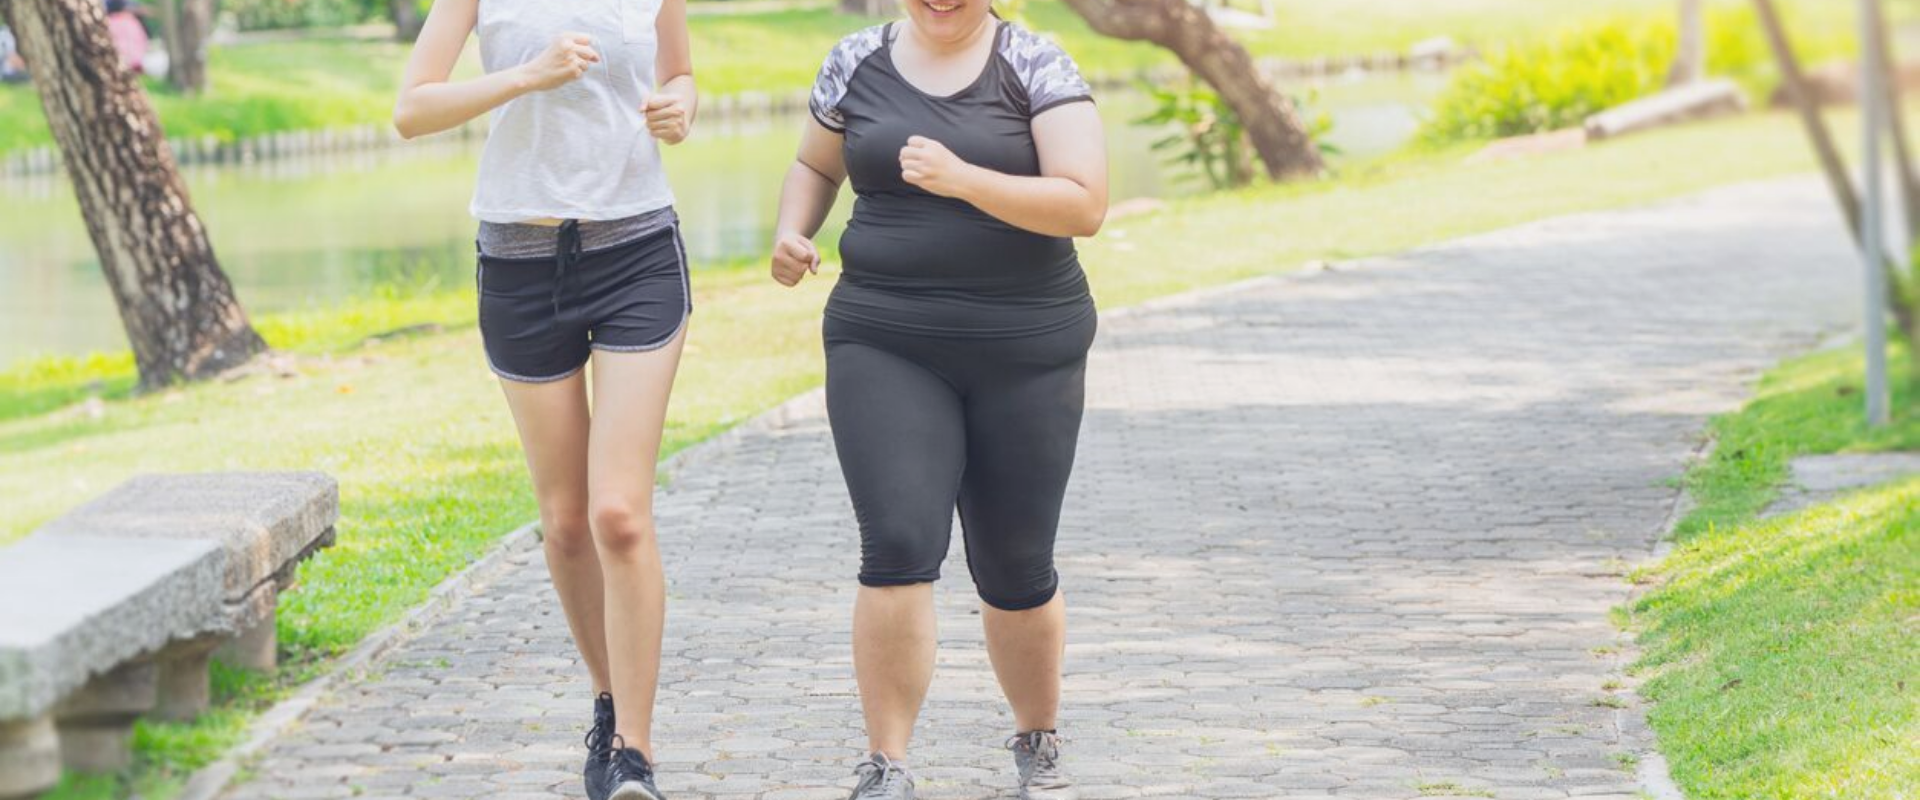 BMI Loading health insurance thailand